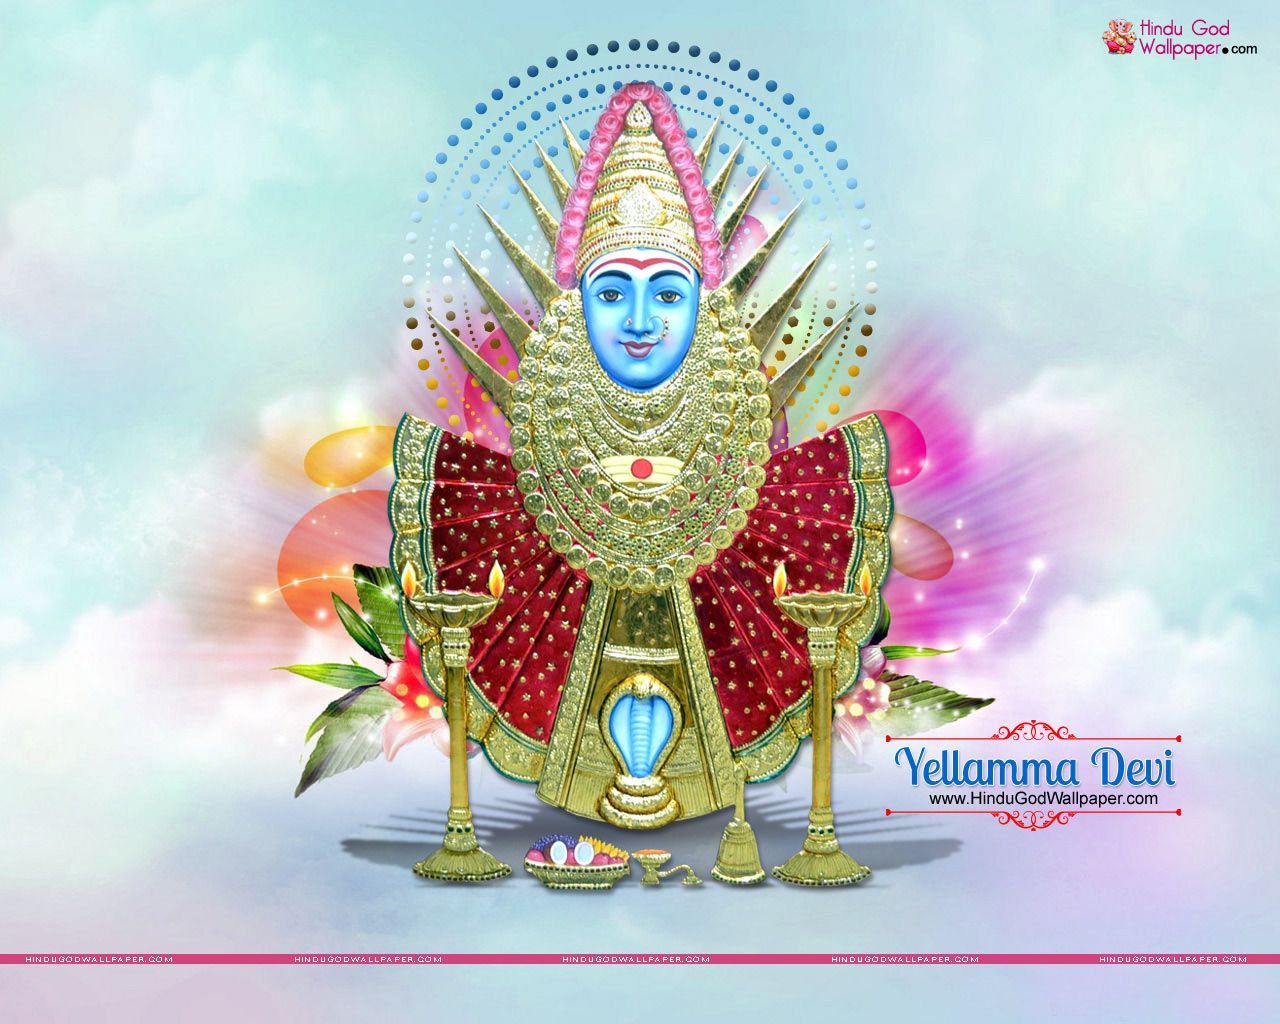 Goddess Renuka Devi (Yellamma) Wallpaper Free Download. Wallpaper free download, Red roses wallpaper, Wallpaper